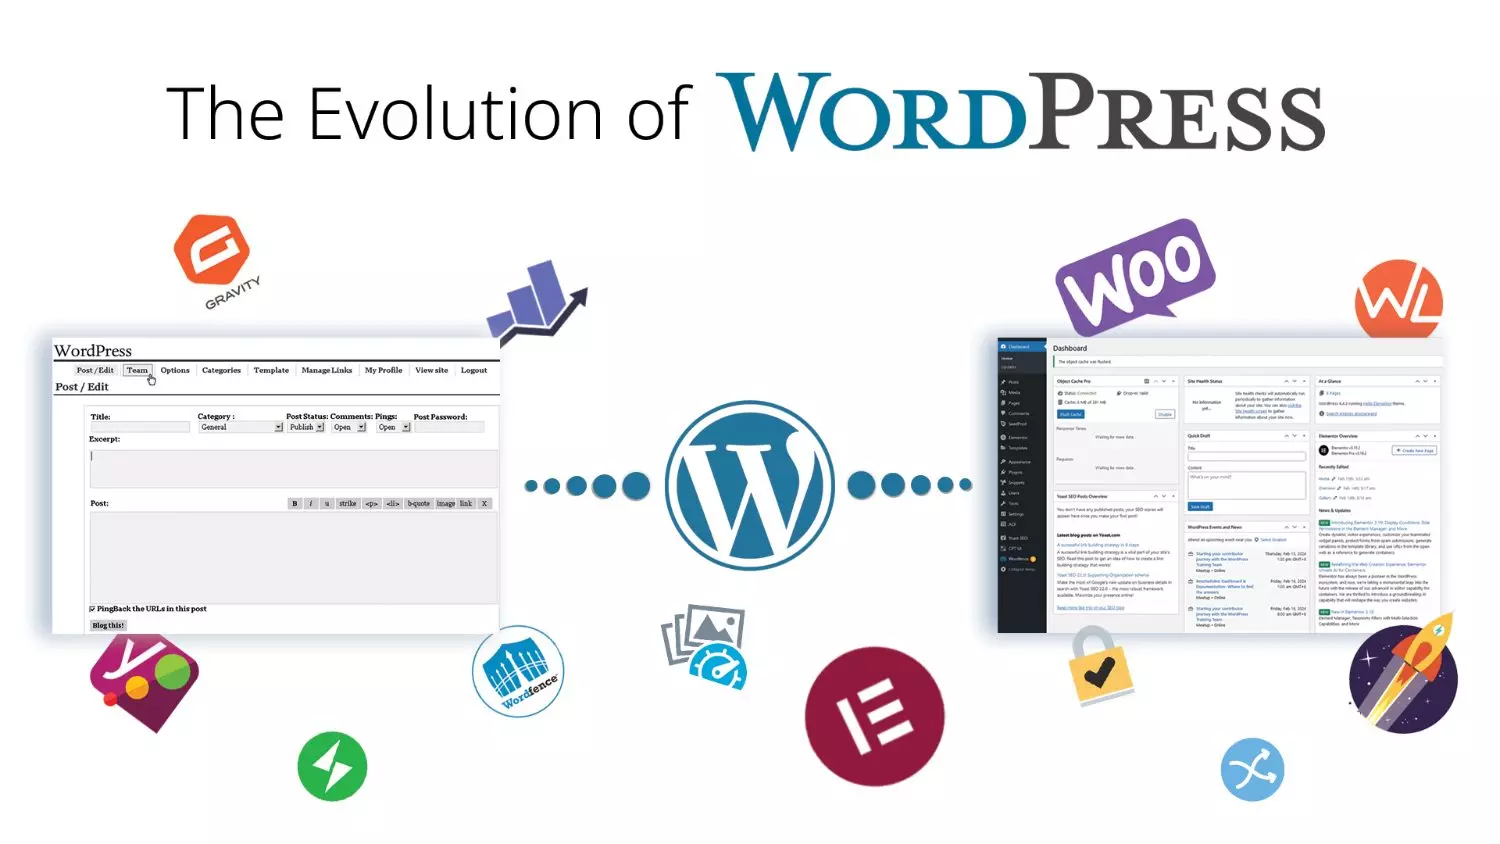  The Evolution of WordPress